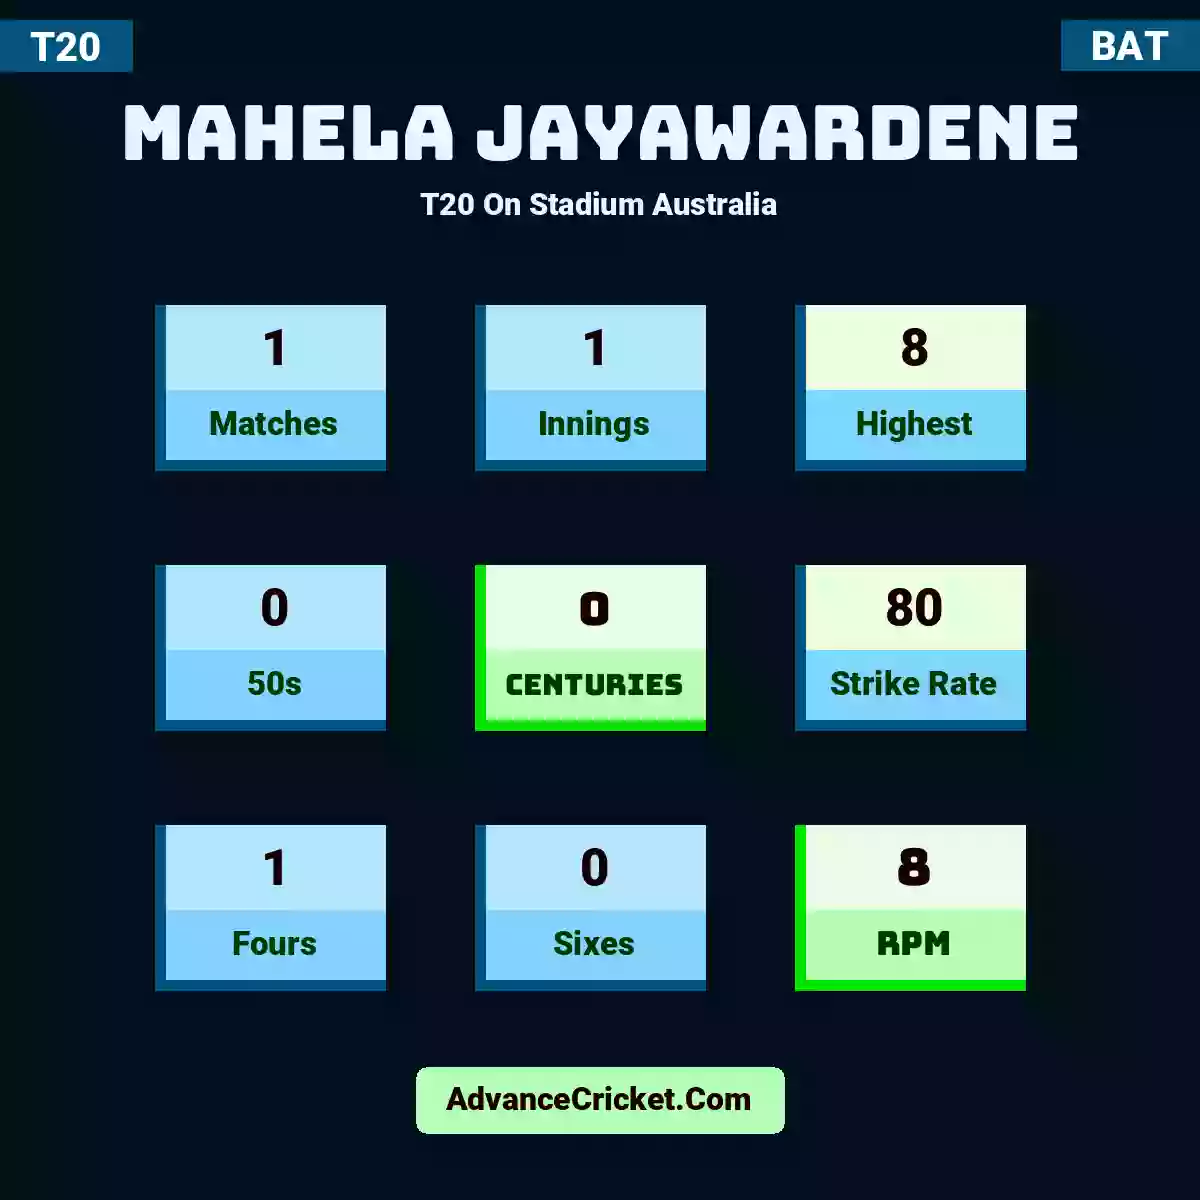 Mahela Jayawardene T20  On Stadium Australia, Mahela Jayawardene played 1 matches, scored 8 runs as highest, 0 half-centuries, and 0 centuries, with a strike rate of 80. M.Jayawardene hit 1 fours and 0 sixes, with an RPM of 8.